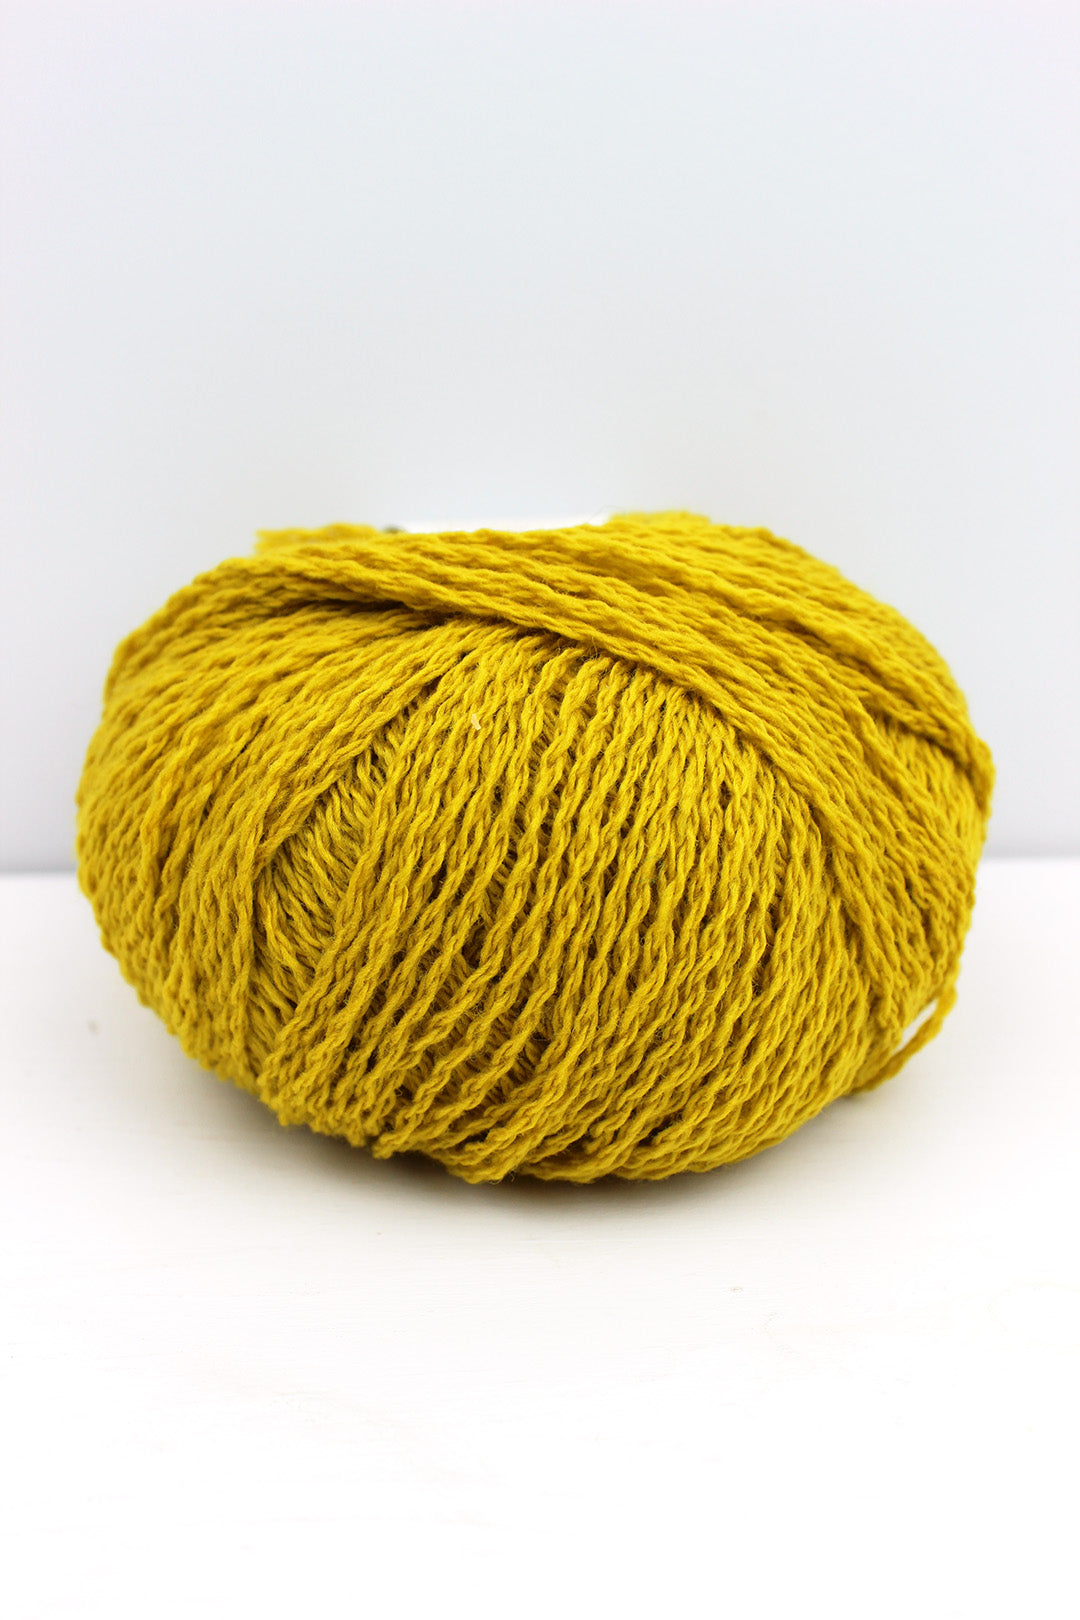 Di Gilpin yarn in yellow Furze colourway. Scottish Textiles Showcase